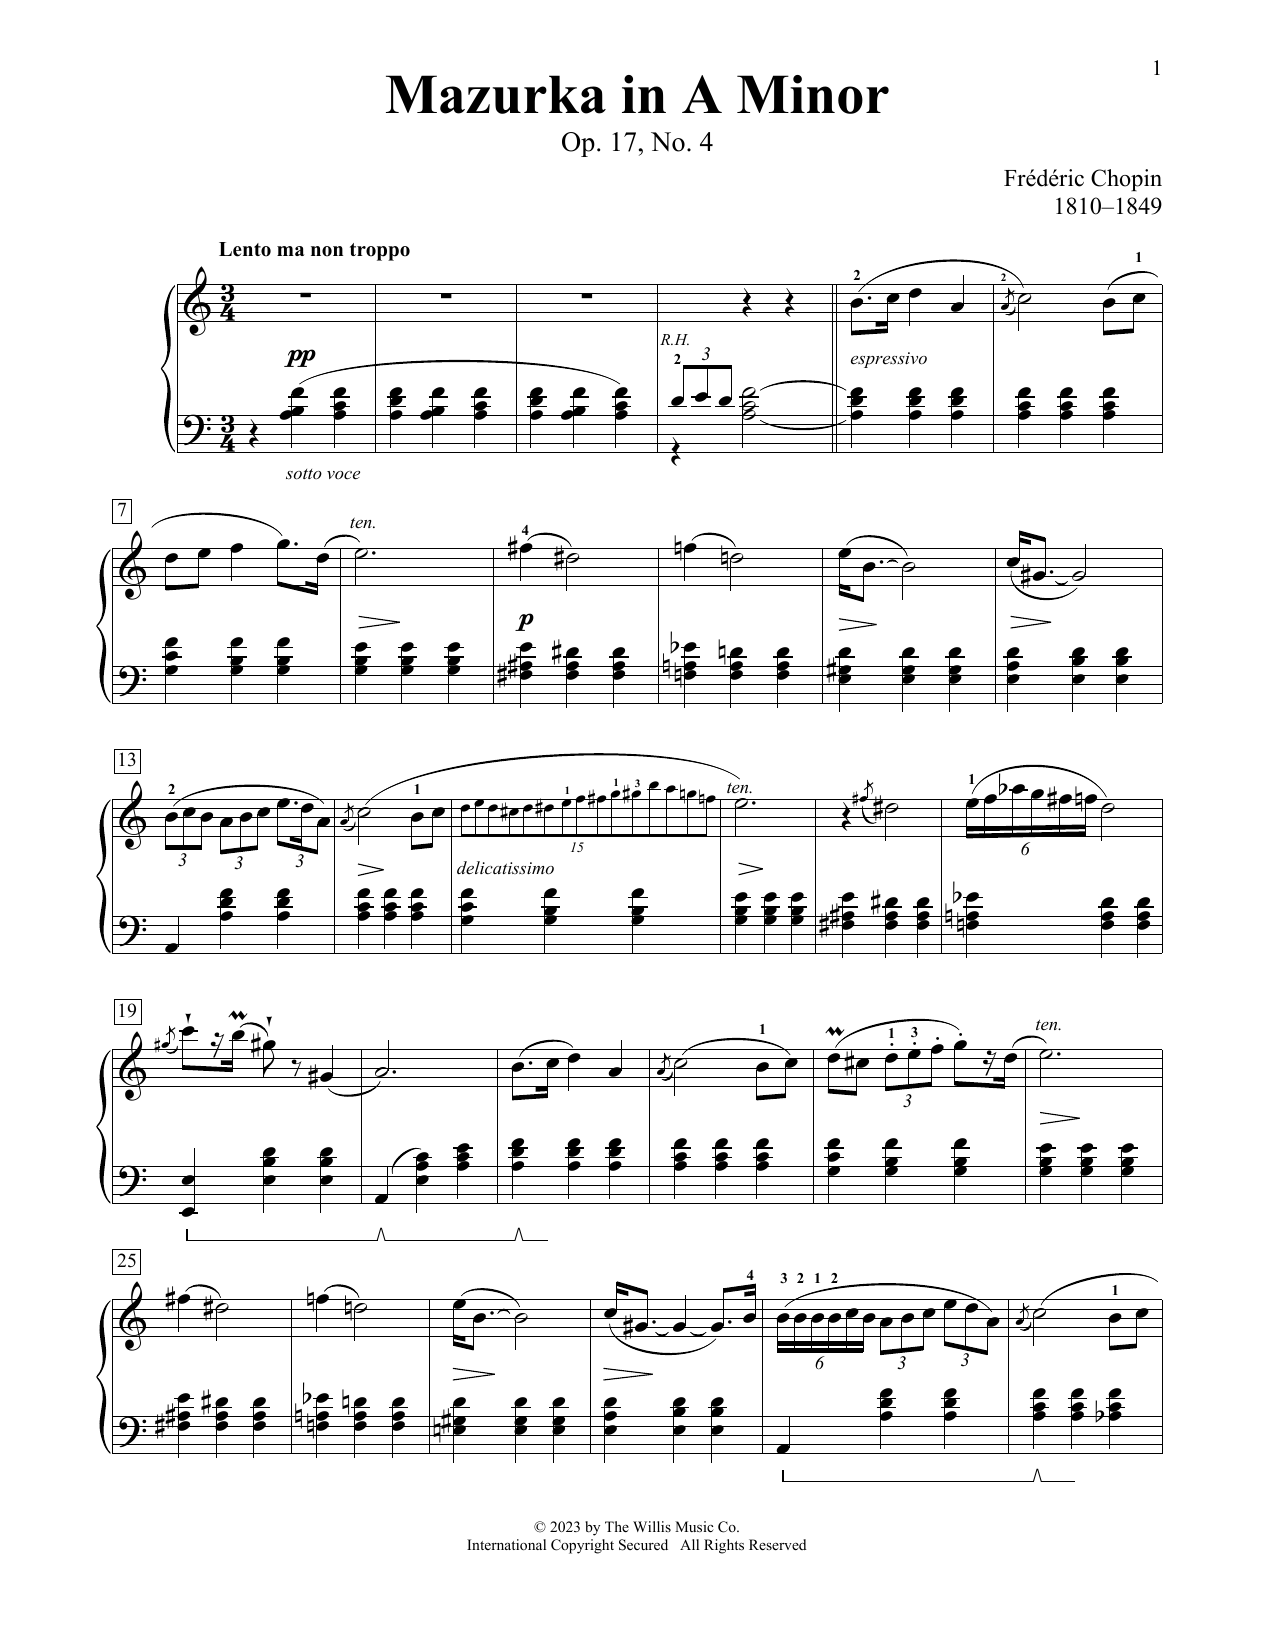 Frederic Chopin Mazurka, Op. 17, No. 4 sheet music notes printable PDF score